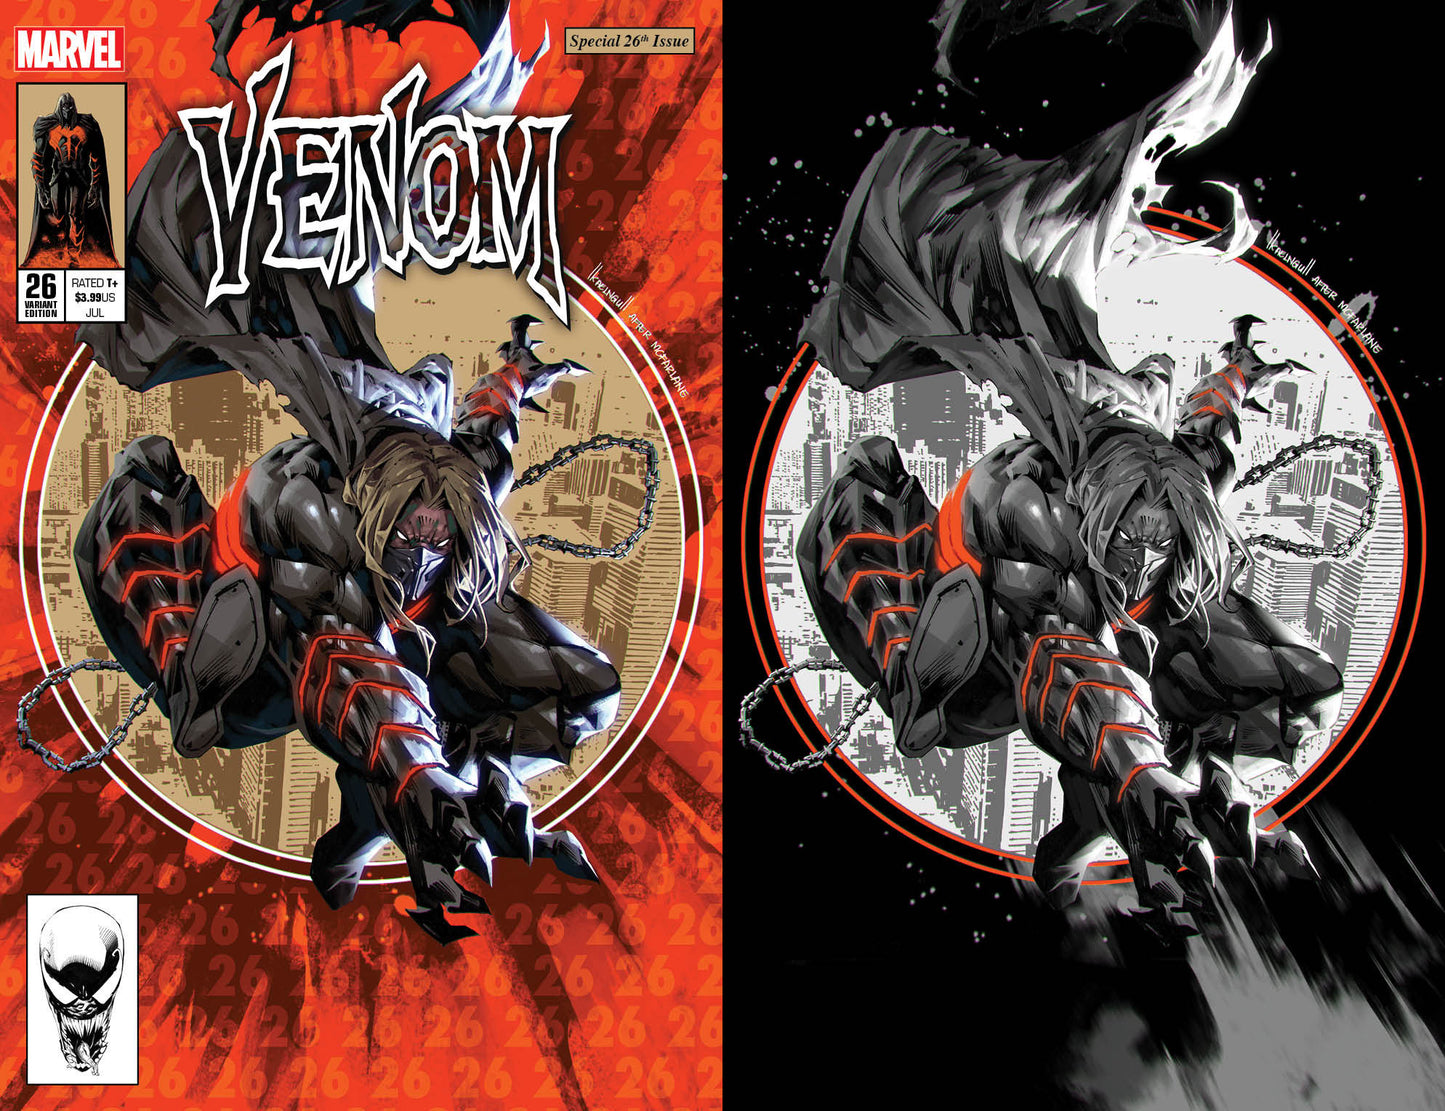 Venom #26 Kael Ngu Amazing Spider-Man 300 301 Homage Variant (07/15/2020) Marvel